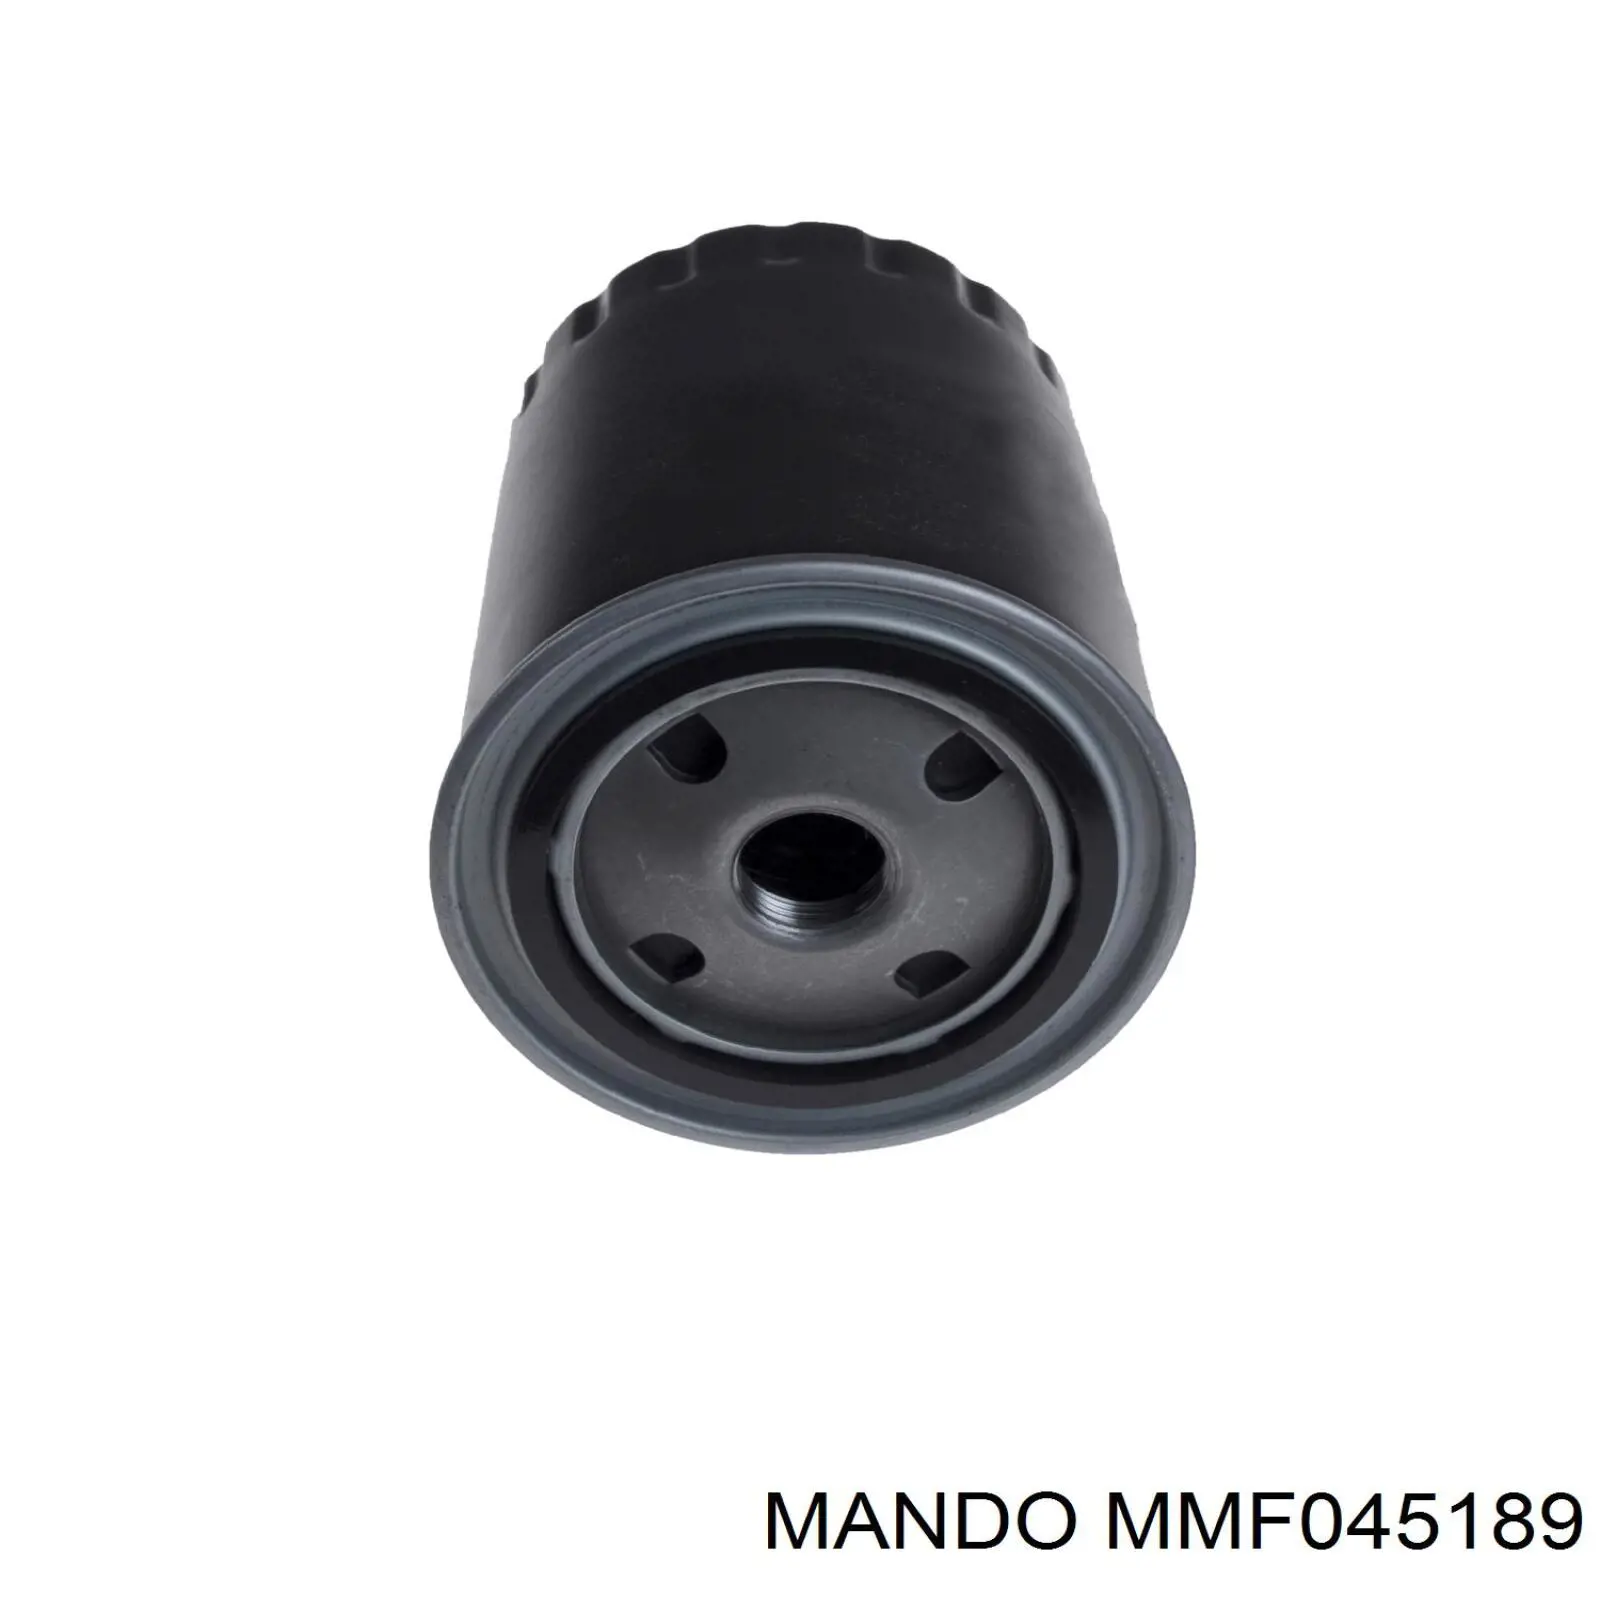 MMF045189 Mando масляный фильтр